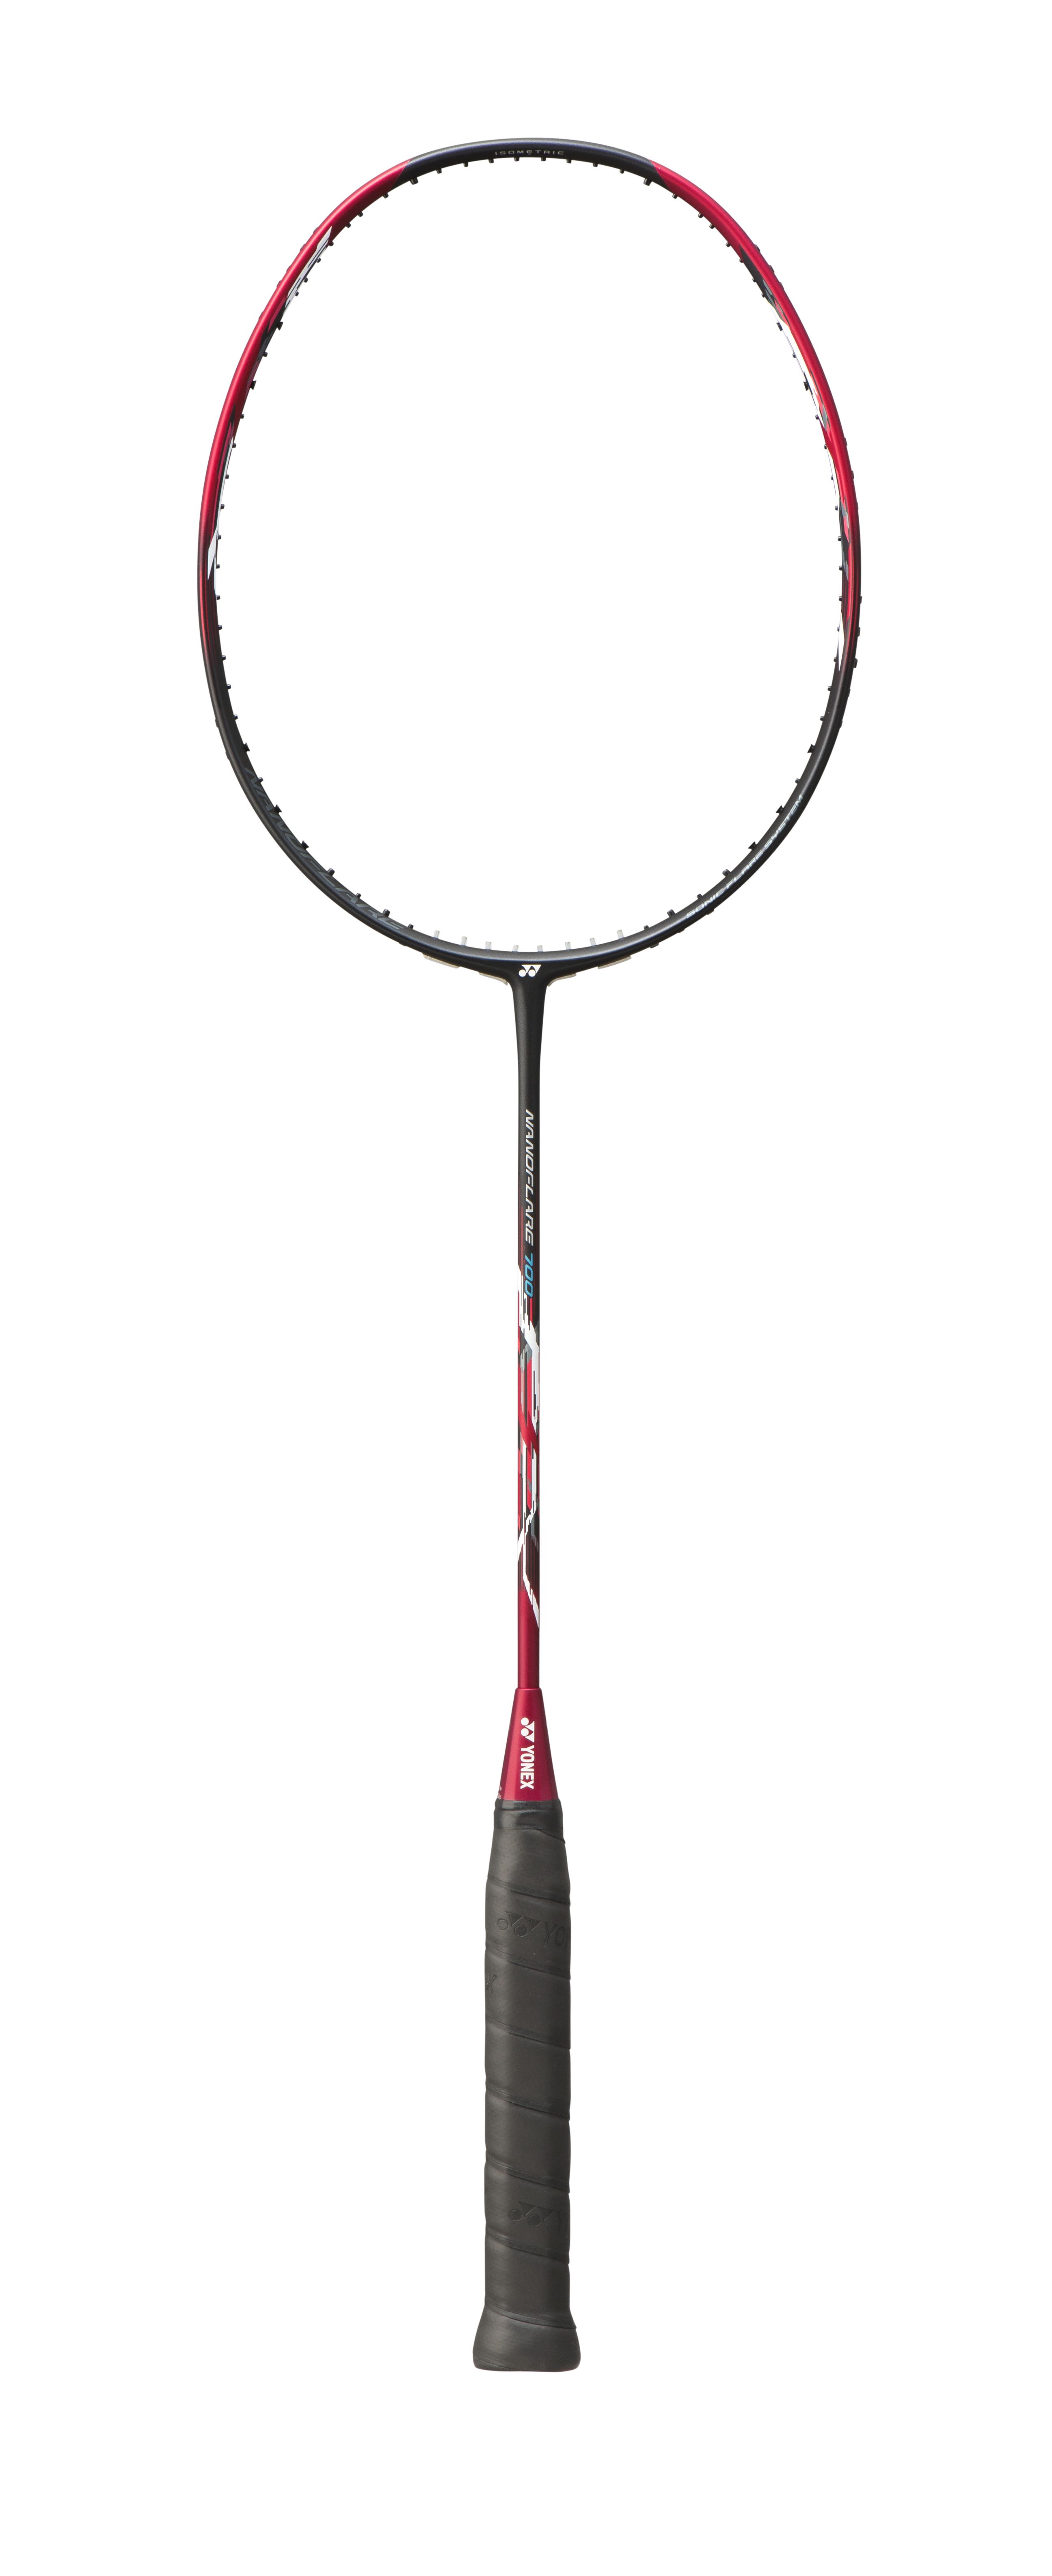 Yonex Badminton Racket NF 700 Red.jpg